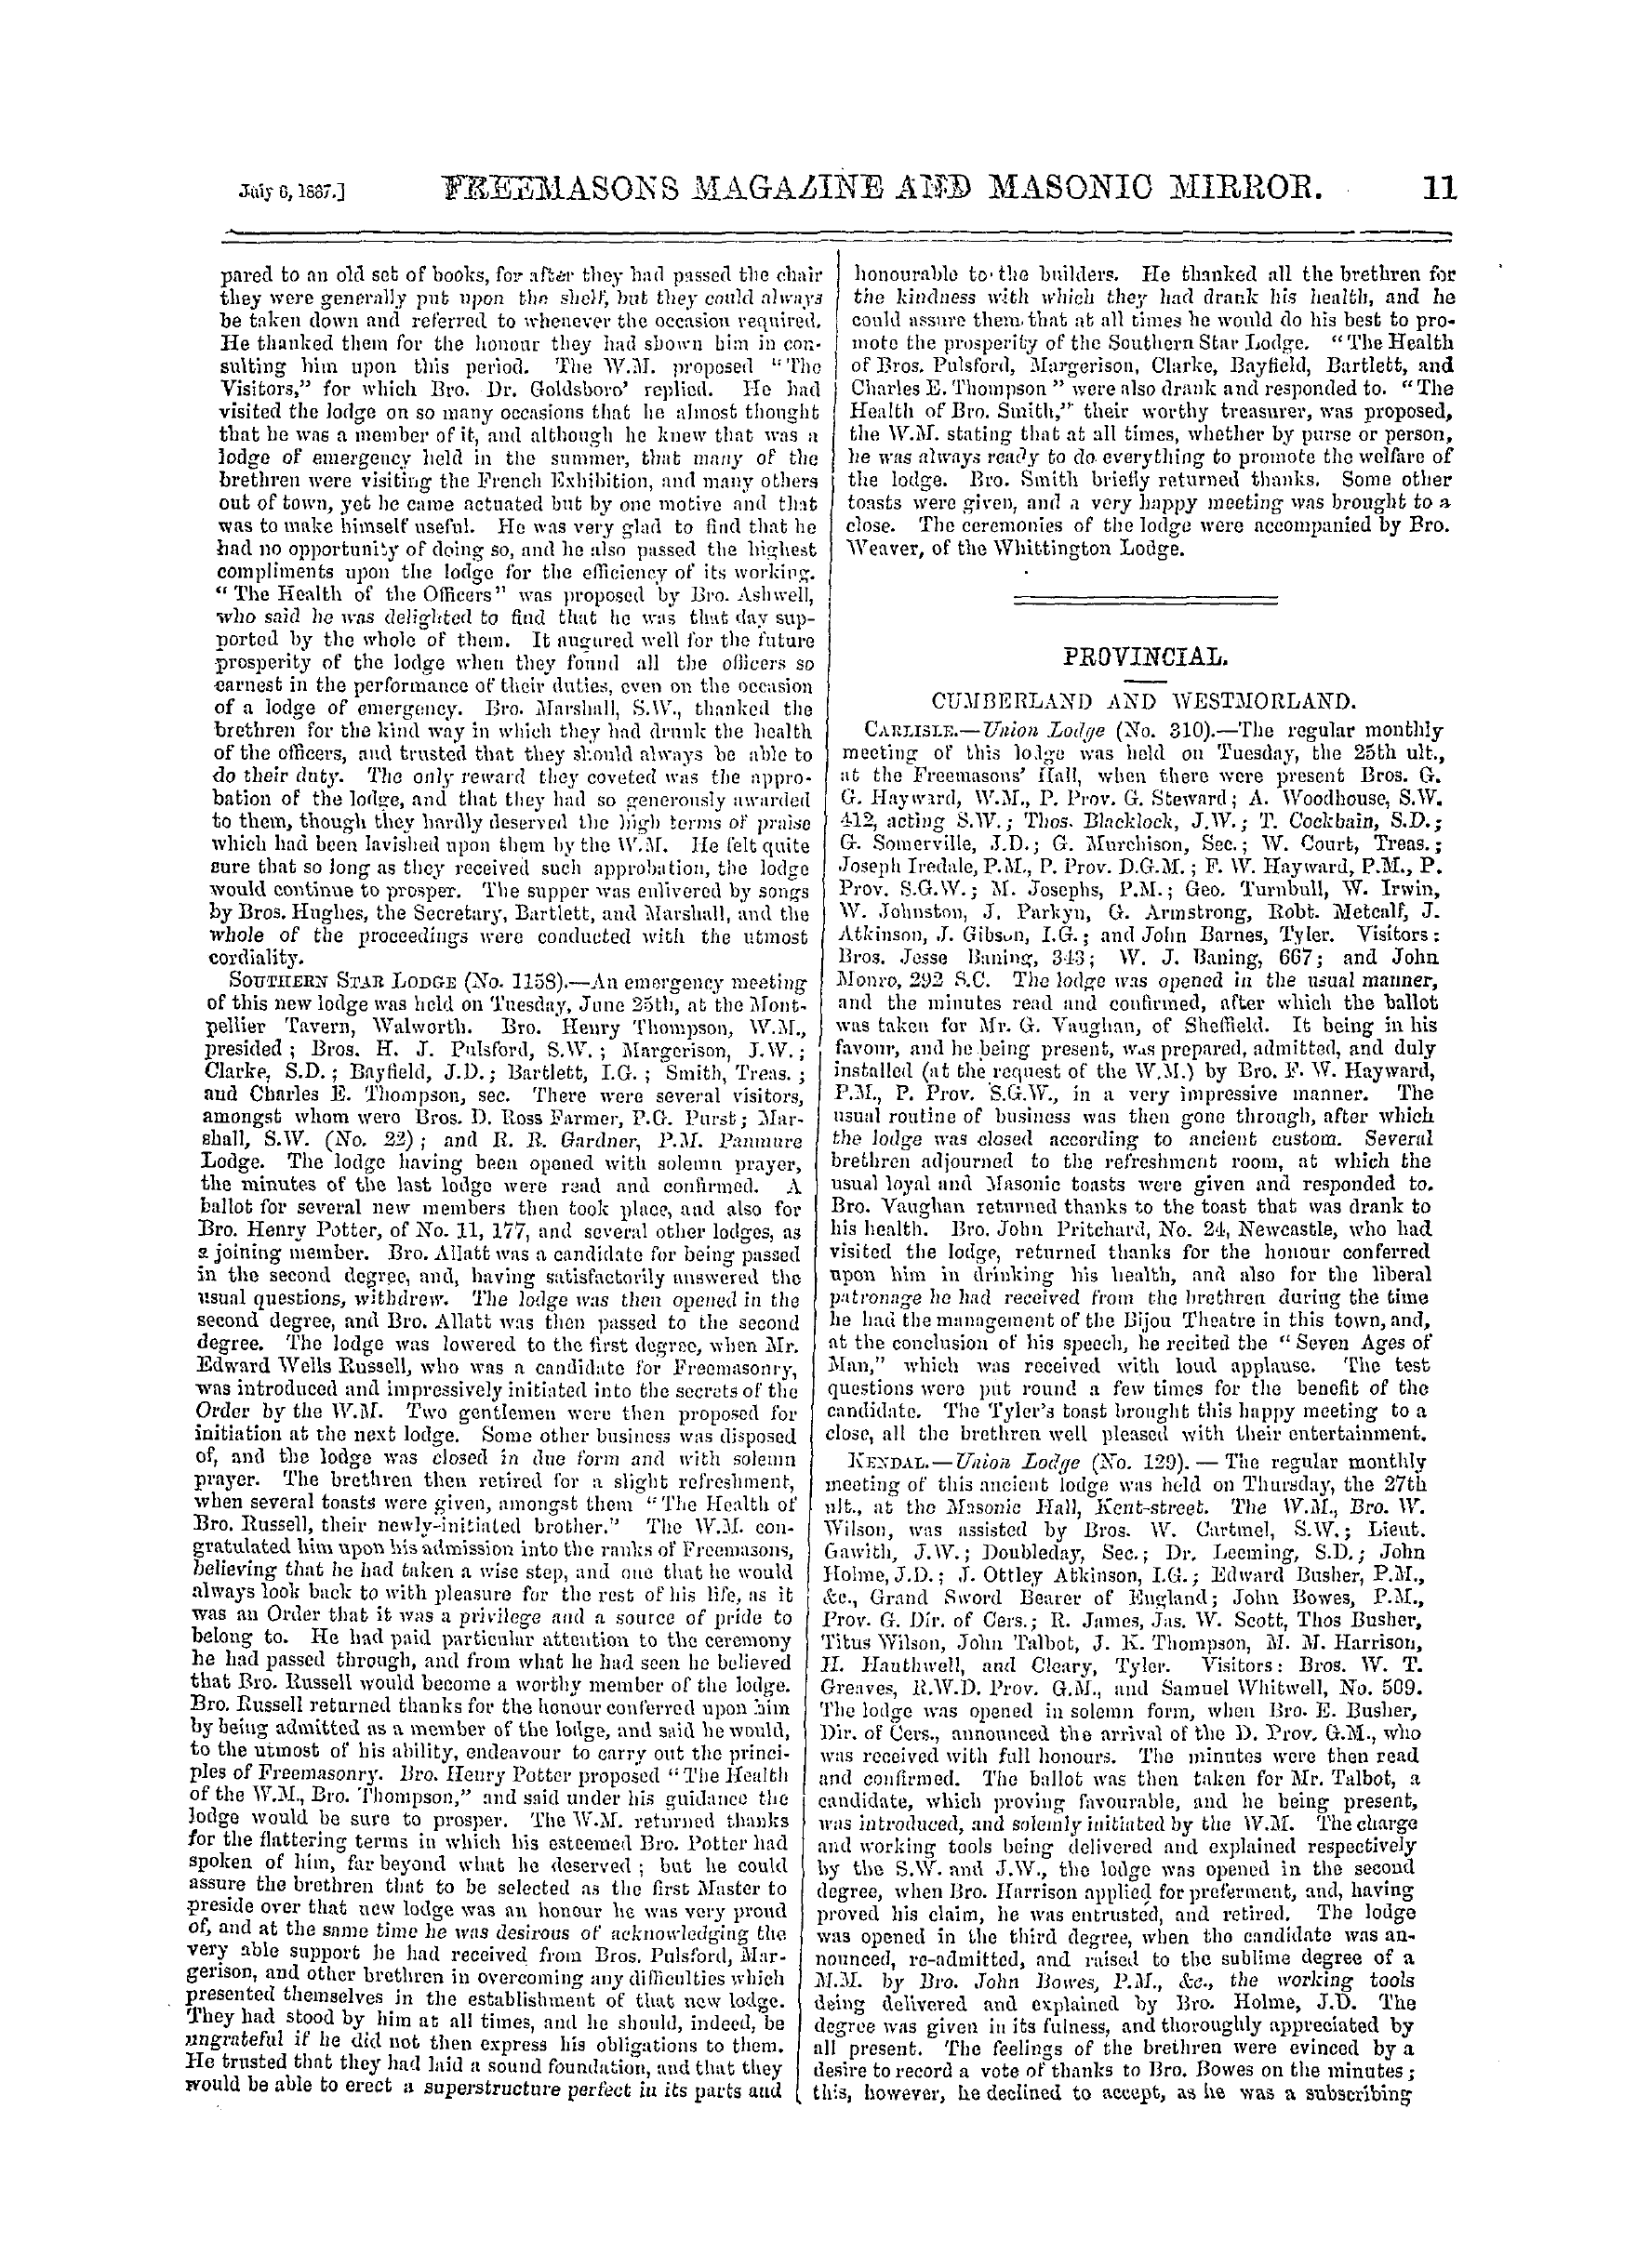 The Freemasons' Monthly Magazine: 1867-07-06 - Metropolitan.